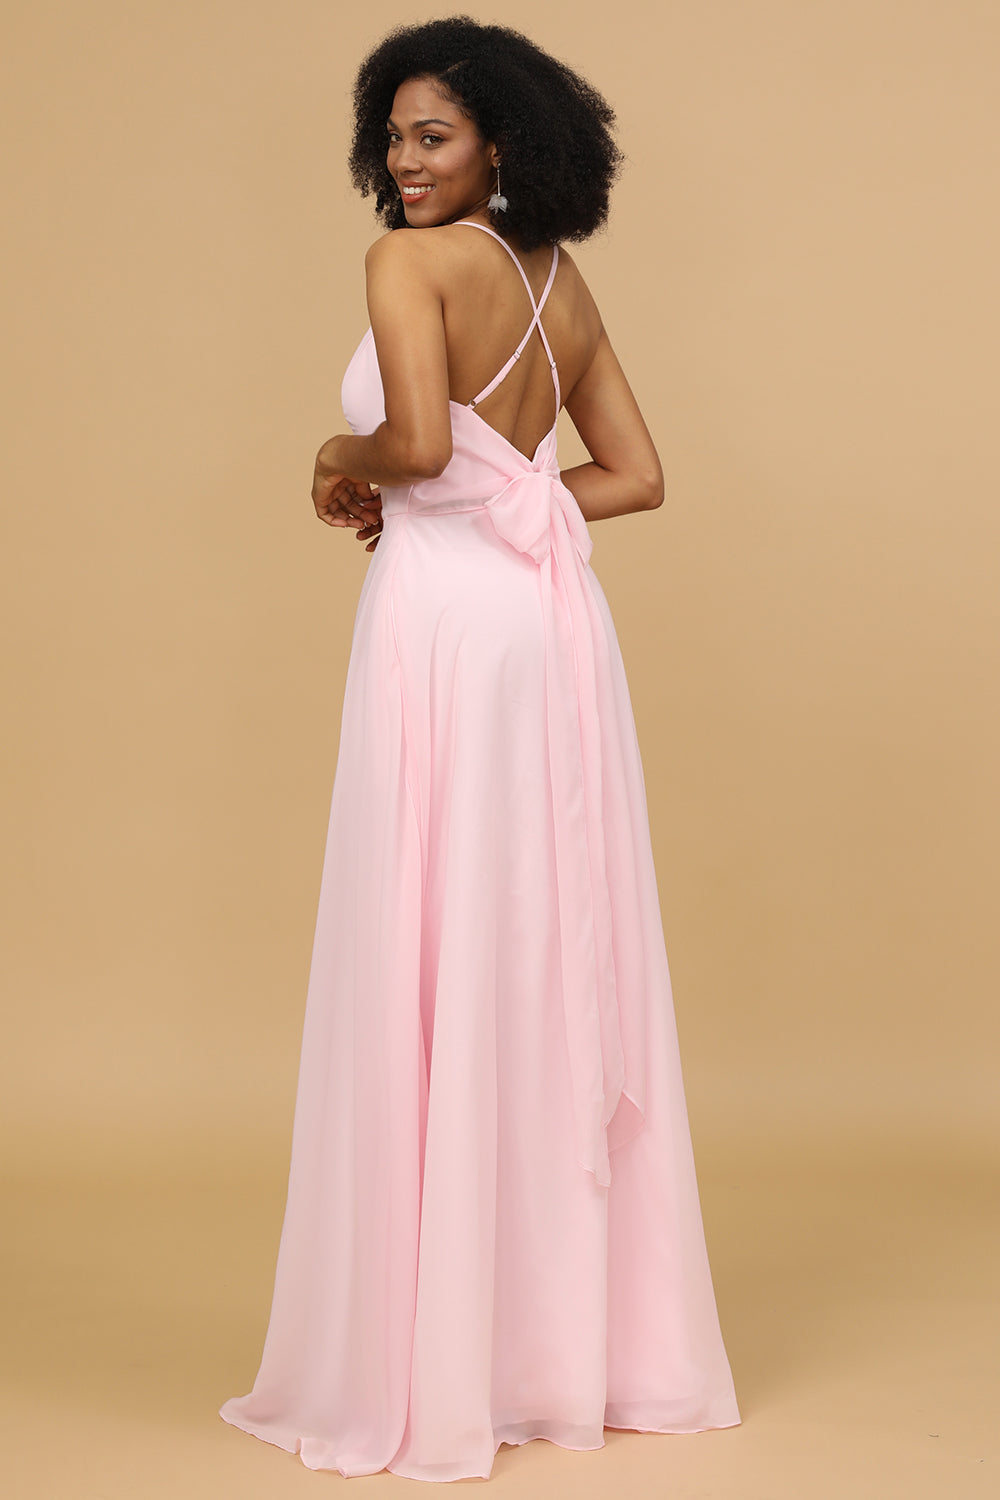 Spaghetti Straps Pink Chiffon Bridesmaid Dress with Pocket